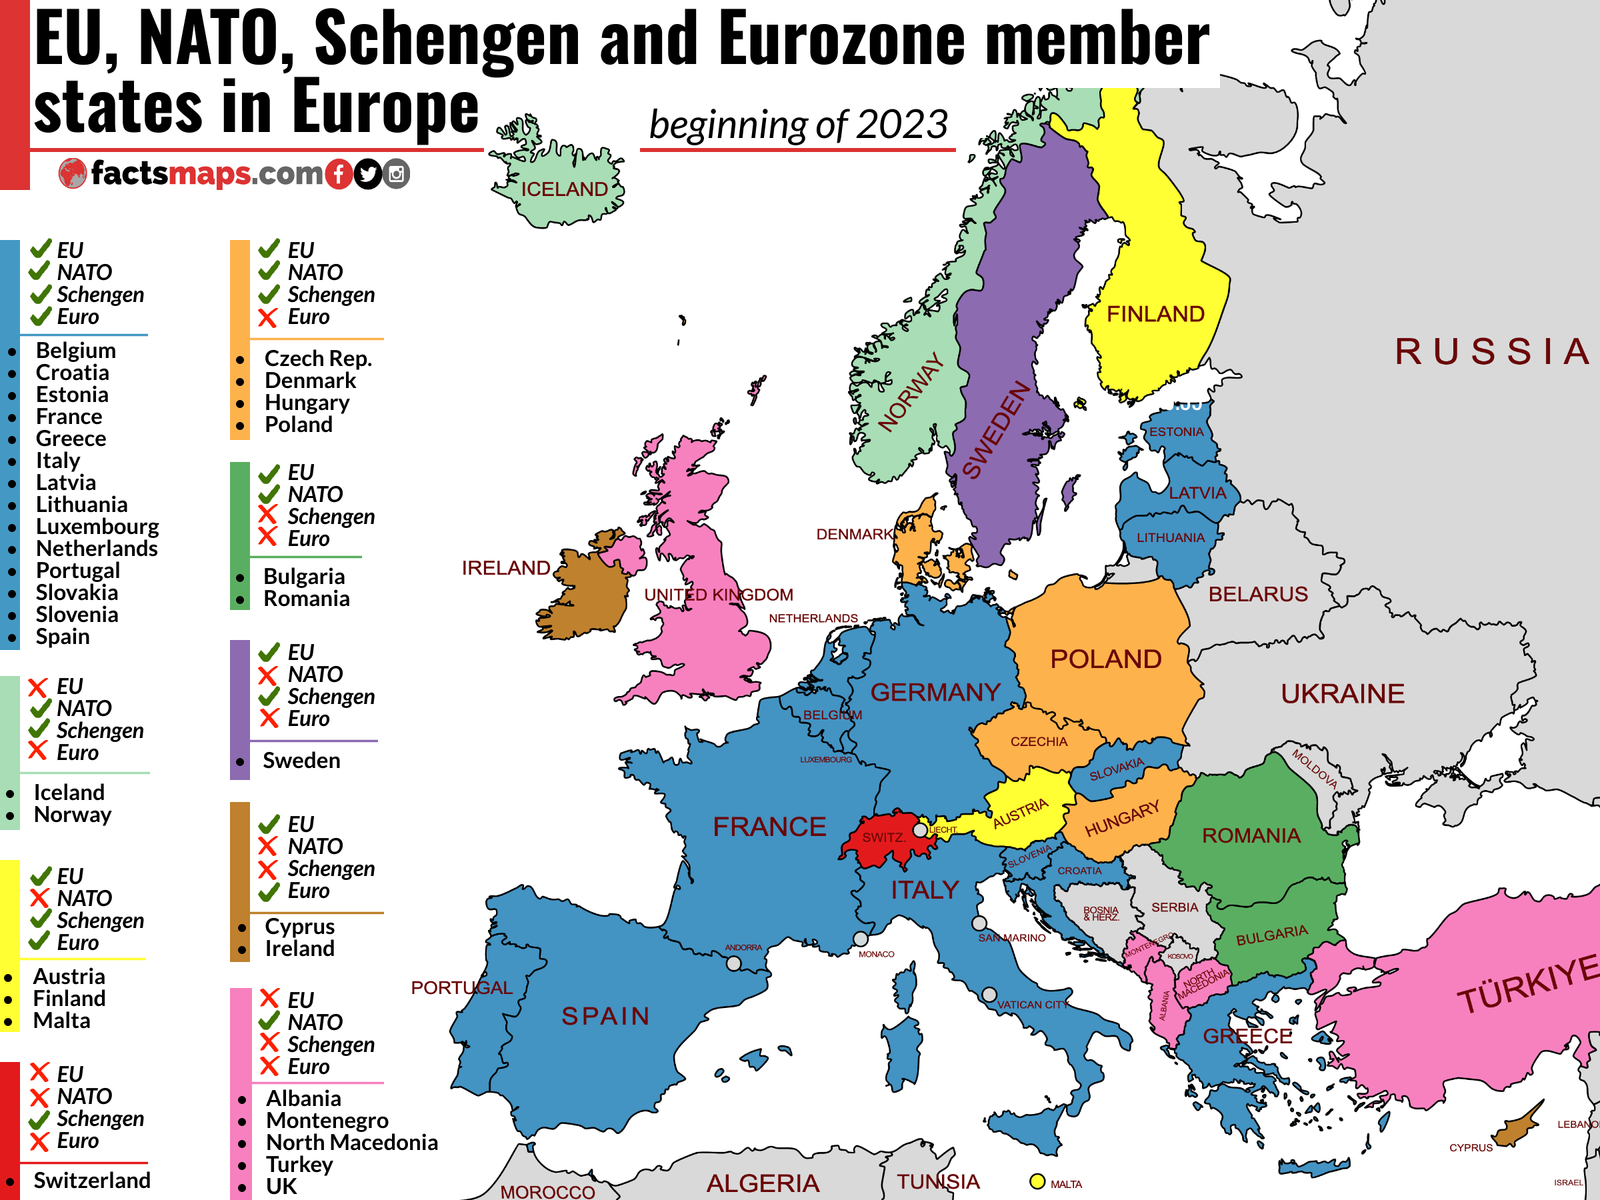 EU, NATO, Schengen and Eurozone member states in Europe beginning of